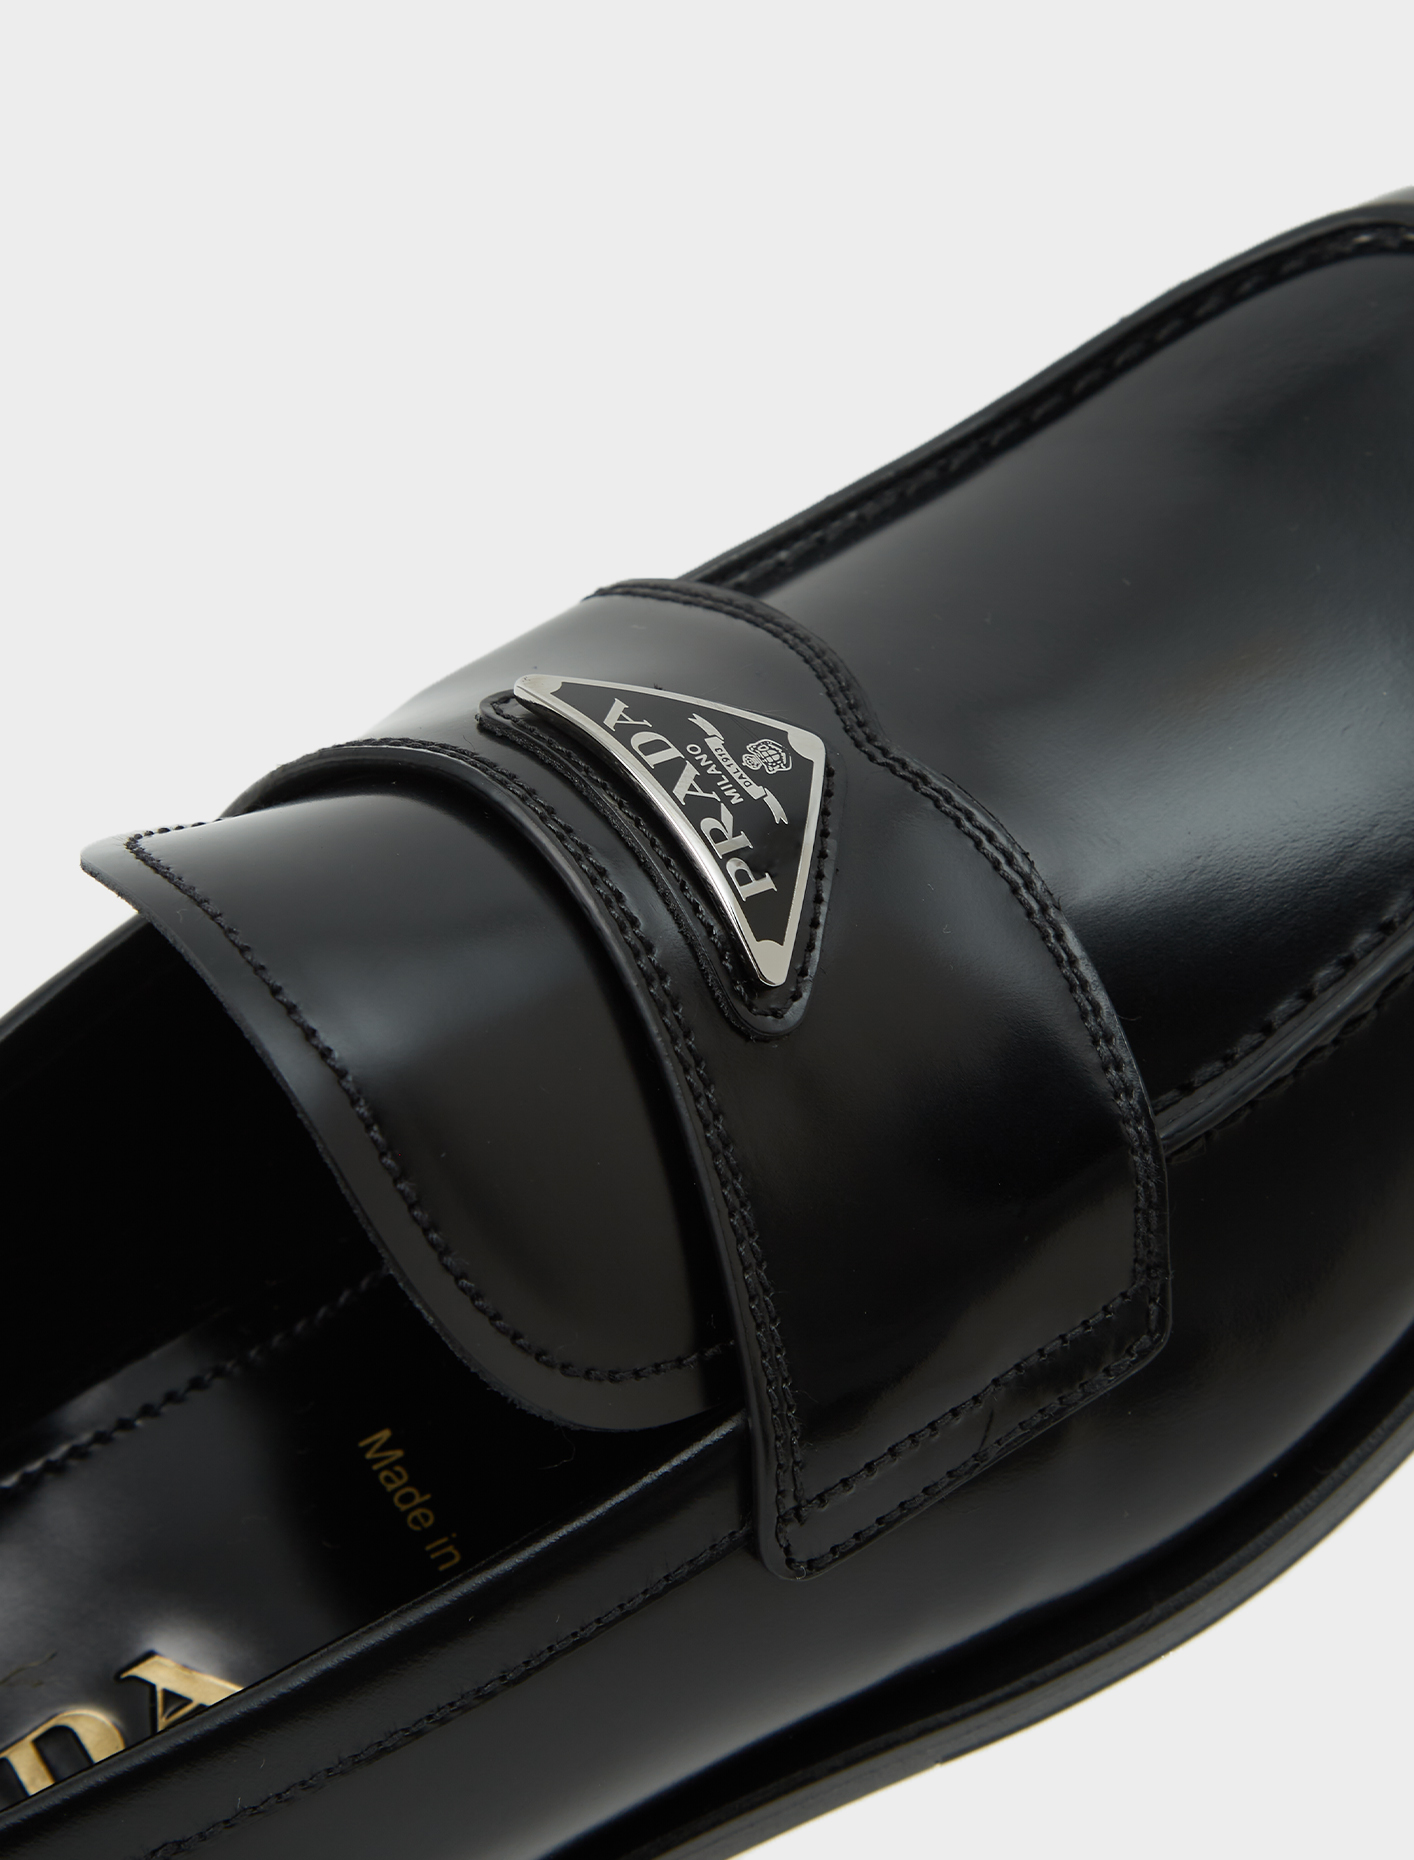 Prada Brushed Leather Loafer in Black | Voo Store Berlin | Worldwide